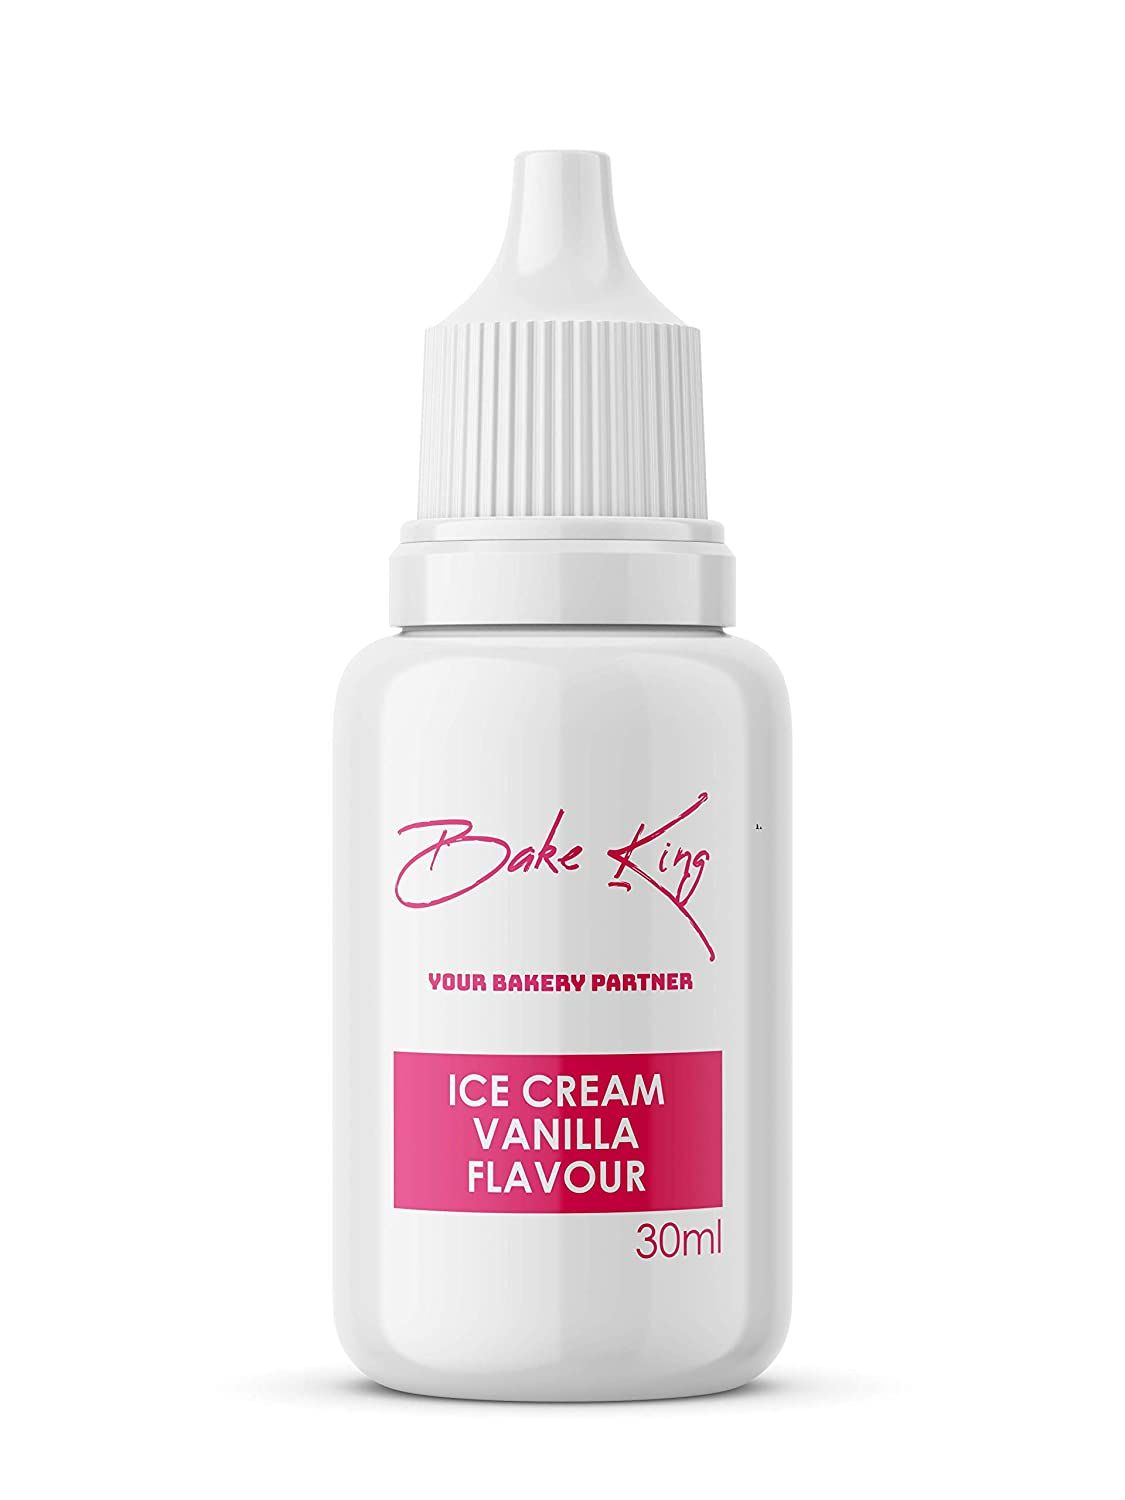 BAKE KING Ice Cream Vanilla Flavour Image